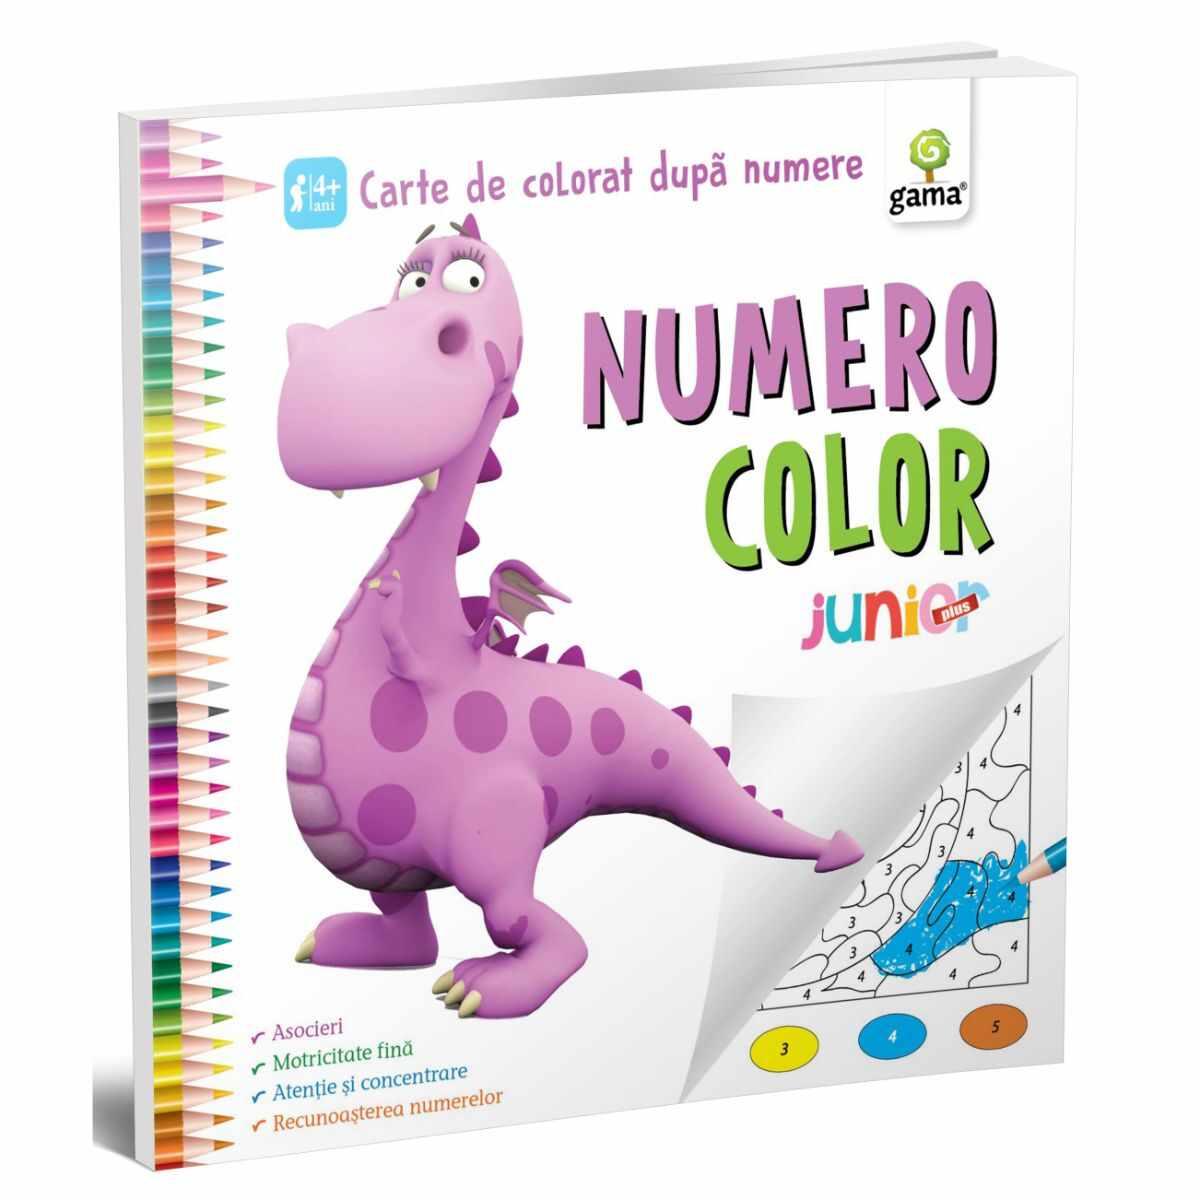 Numero Color junior plus, carte de colorat dupa numere 